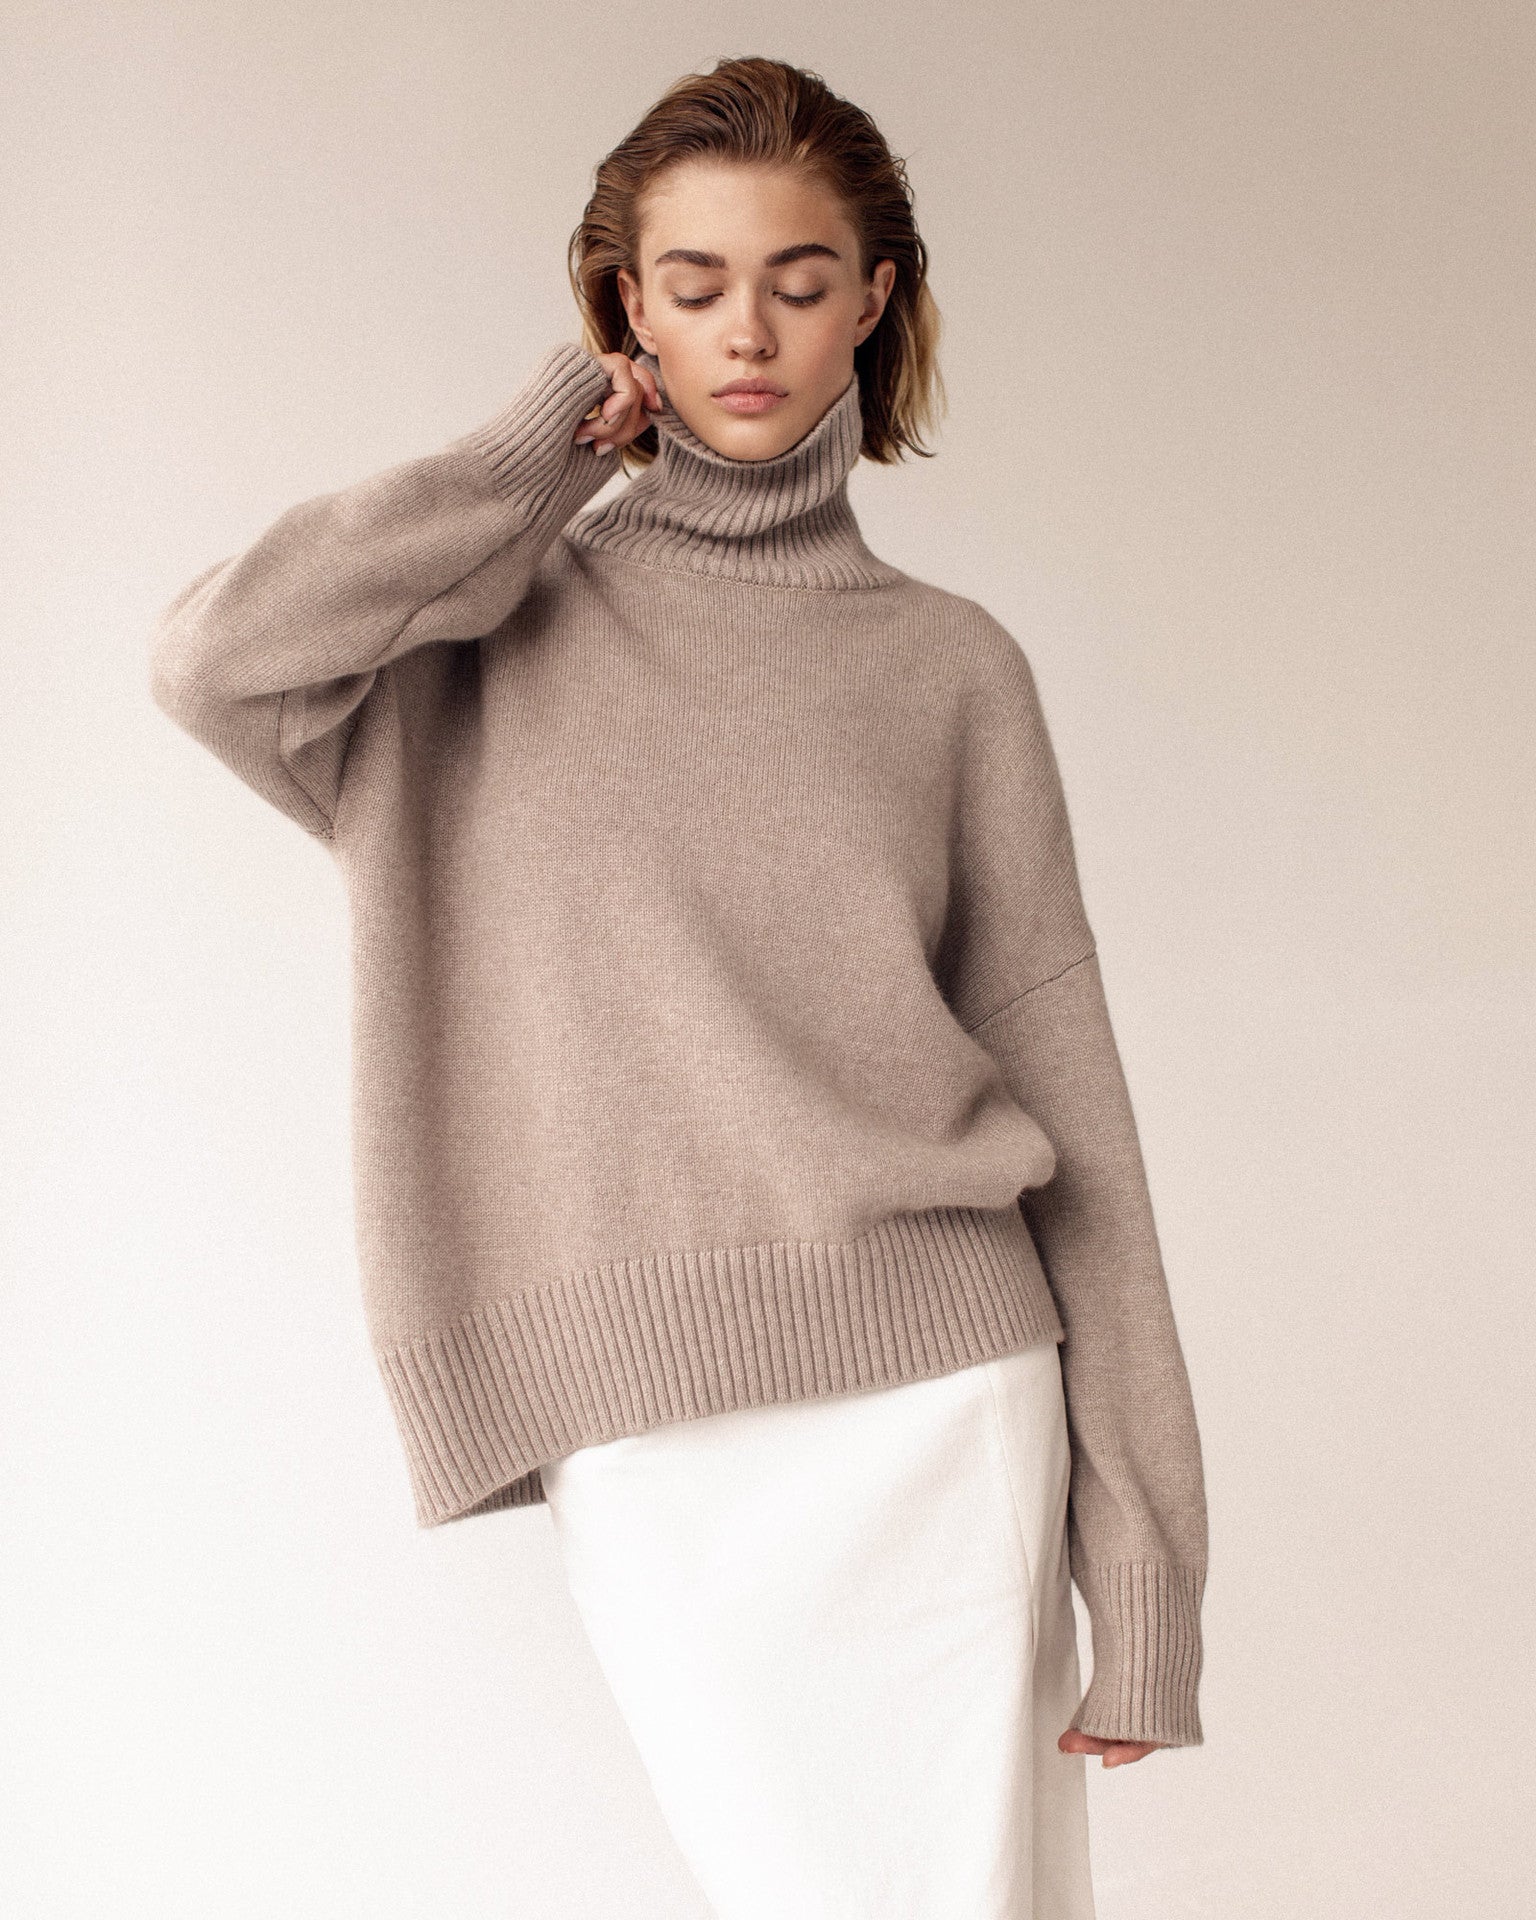 High Sleeve Collar Loose Sweater Women's Knitwear